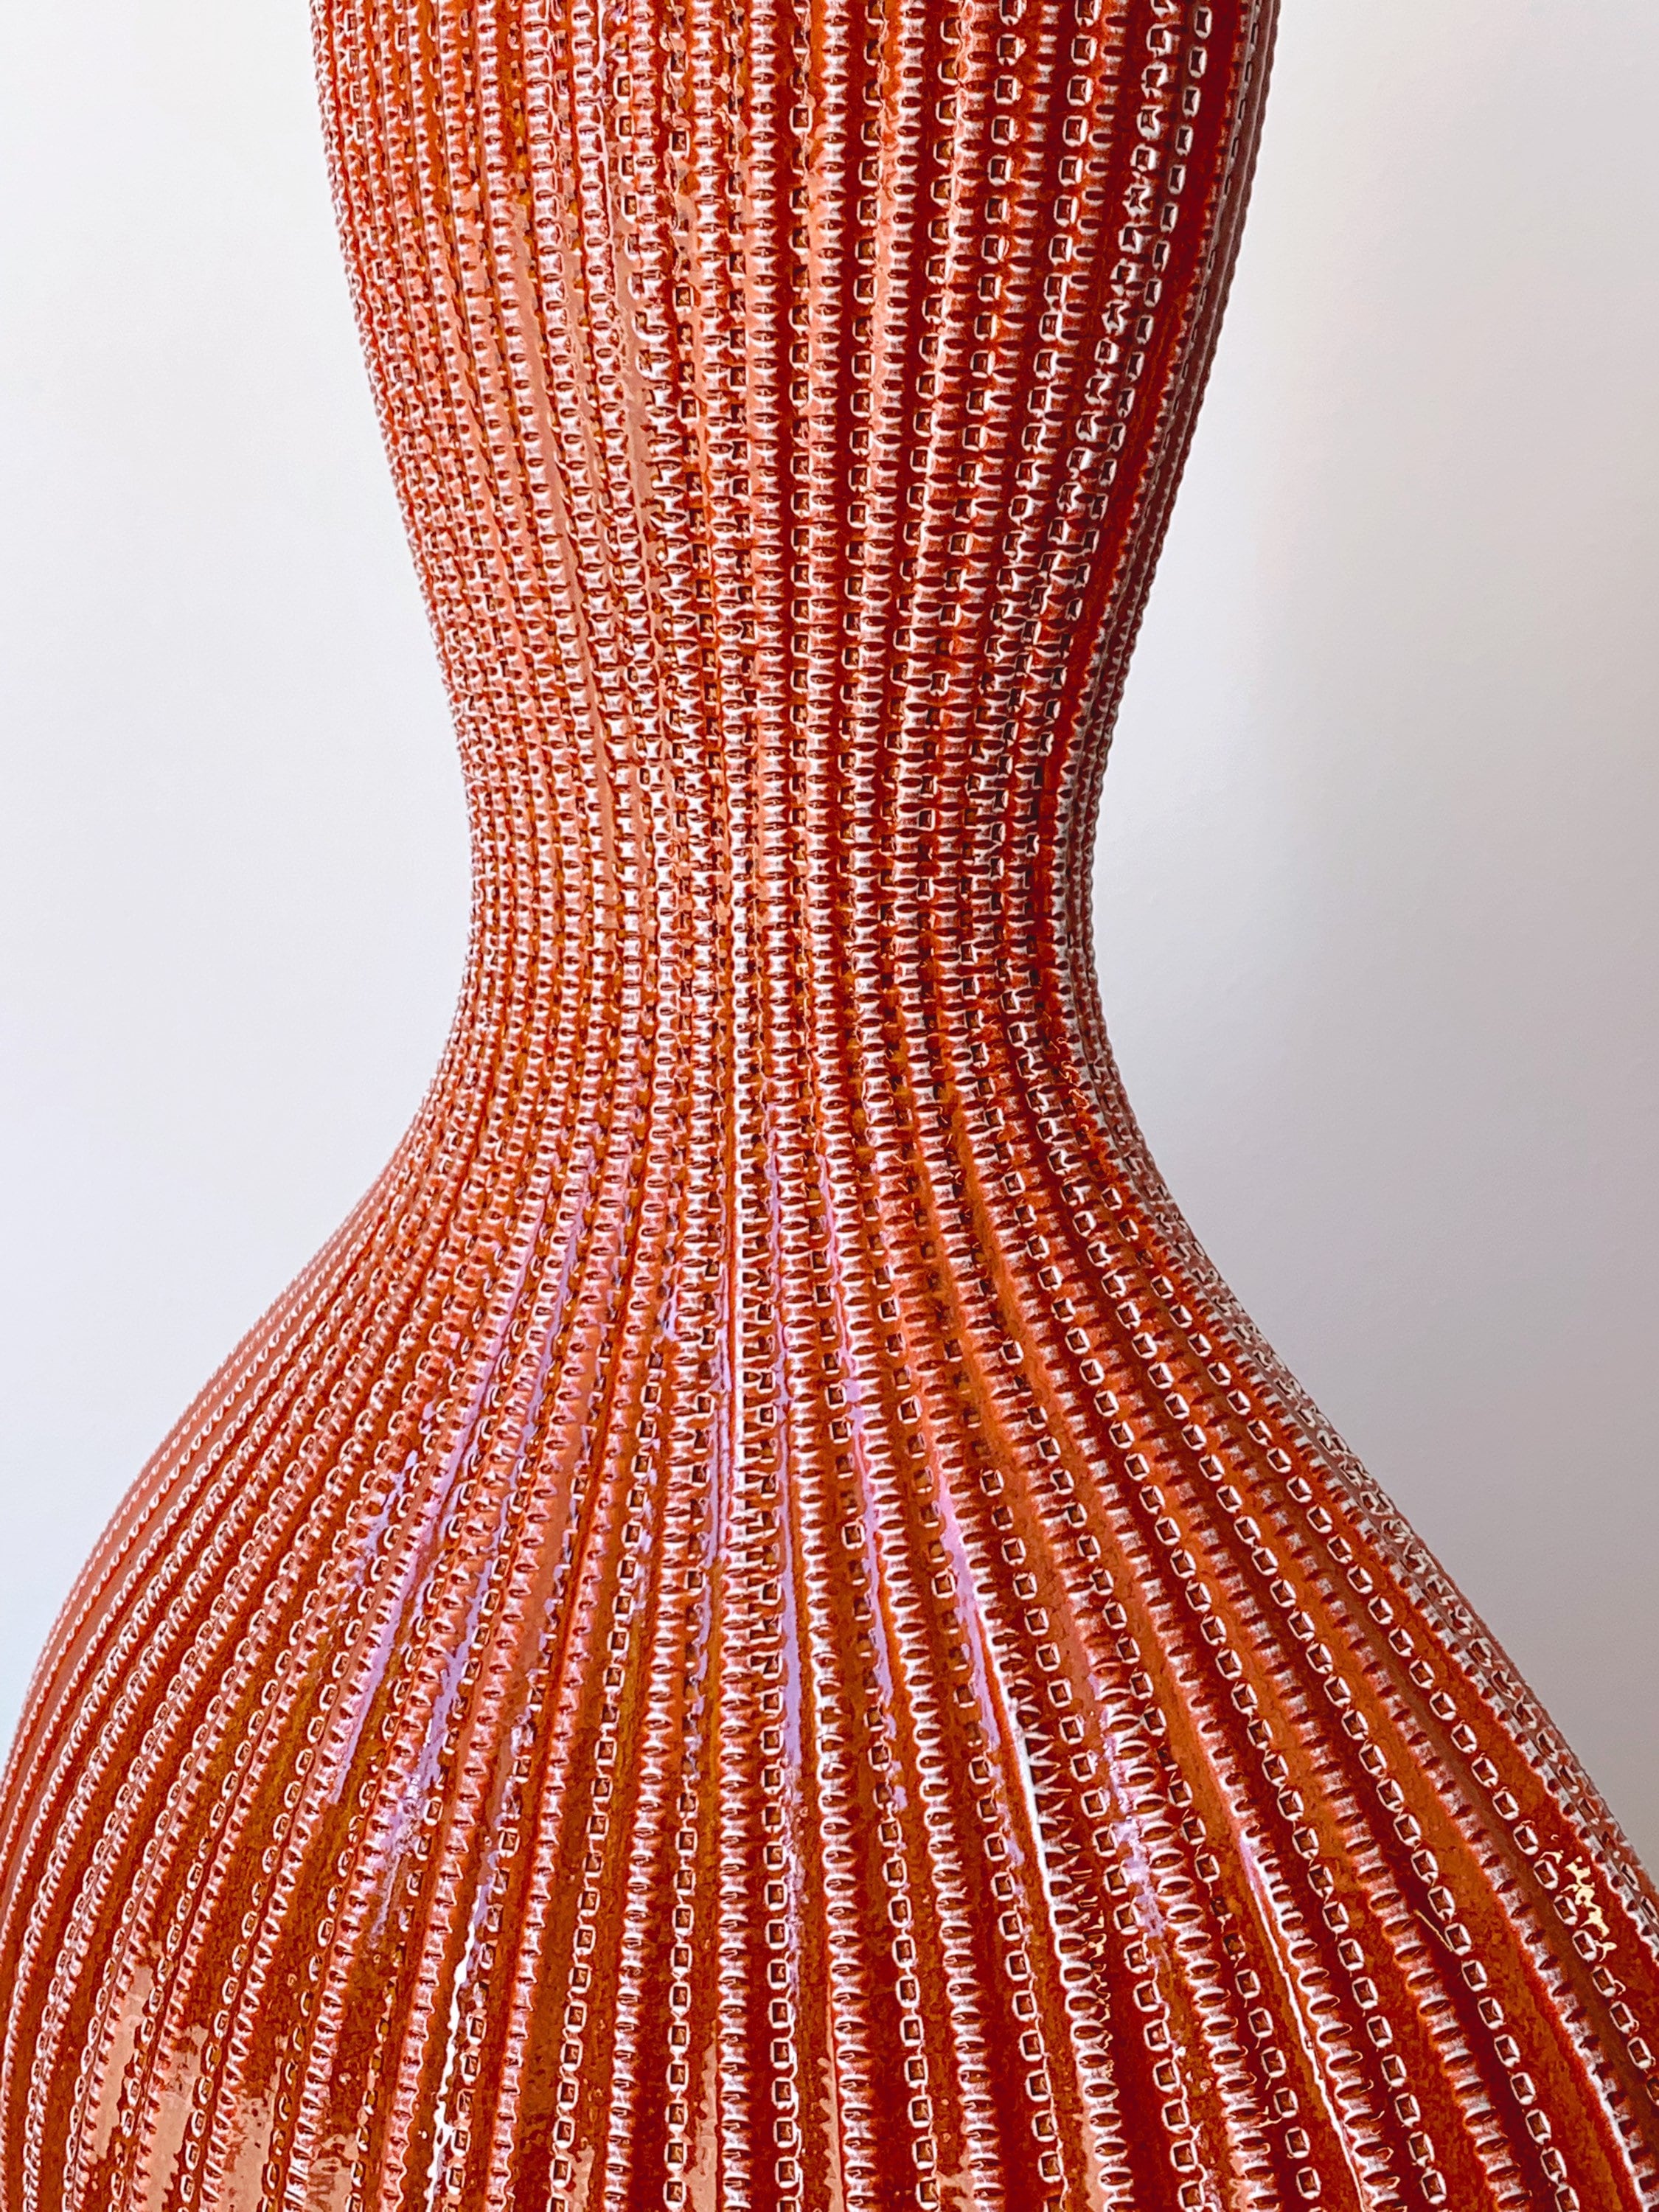 Sun Ray Vase from Revelation by Uttermost | Curved Modern Vase